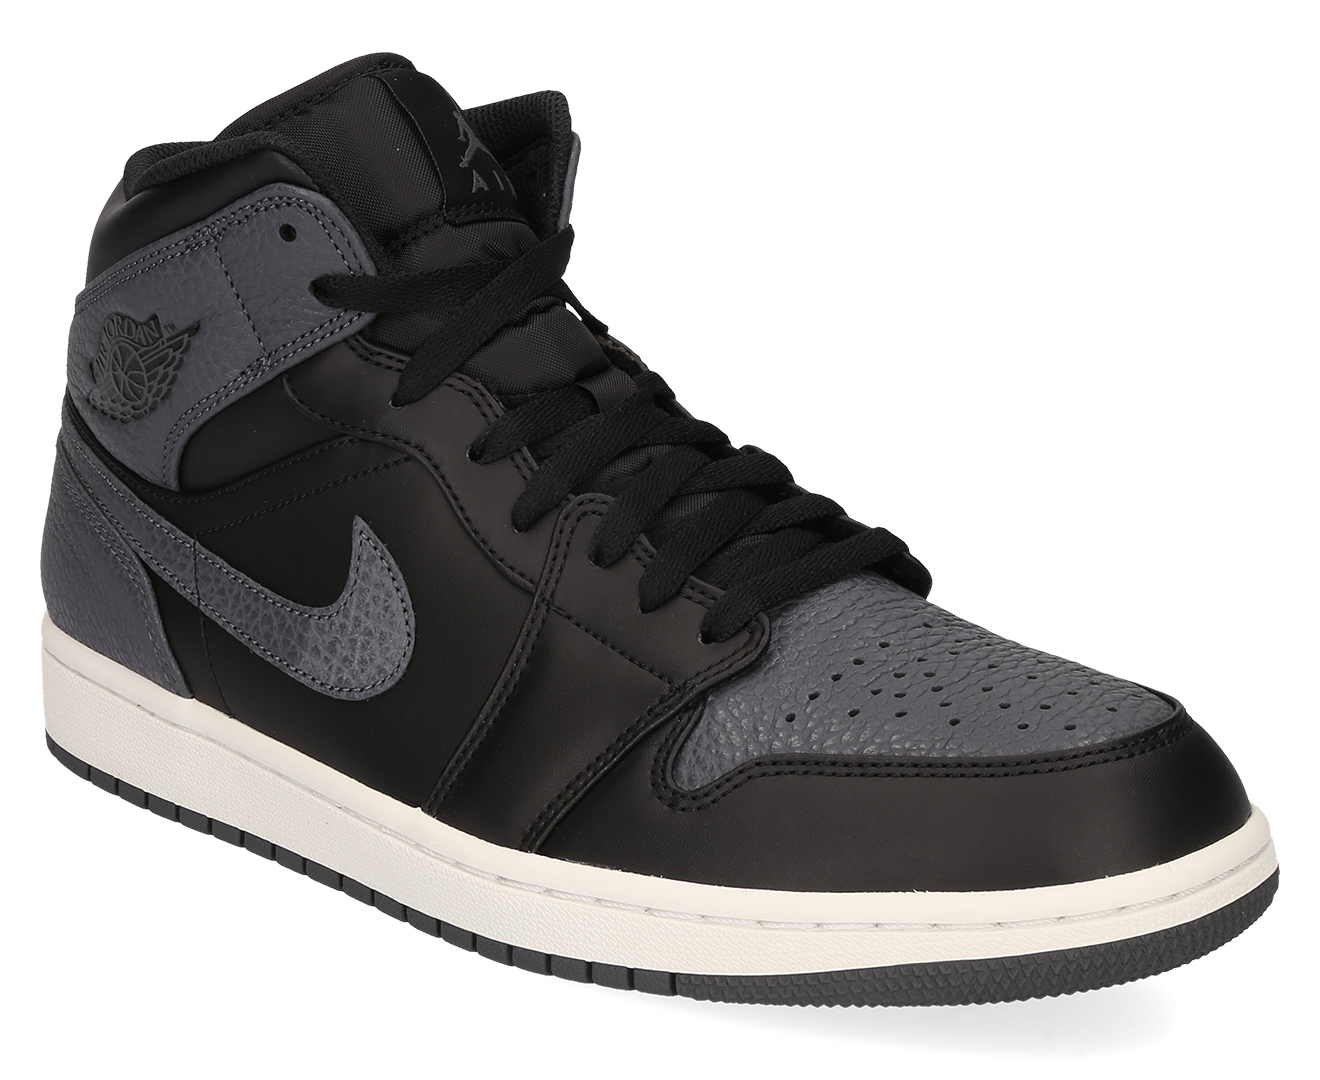 Nike Men's Air Jordan 1 MID Shoe - Black/Dark Grey-Summit White | Catch ...